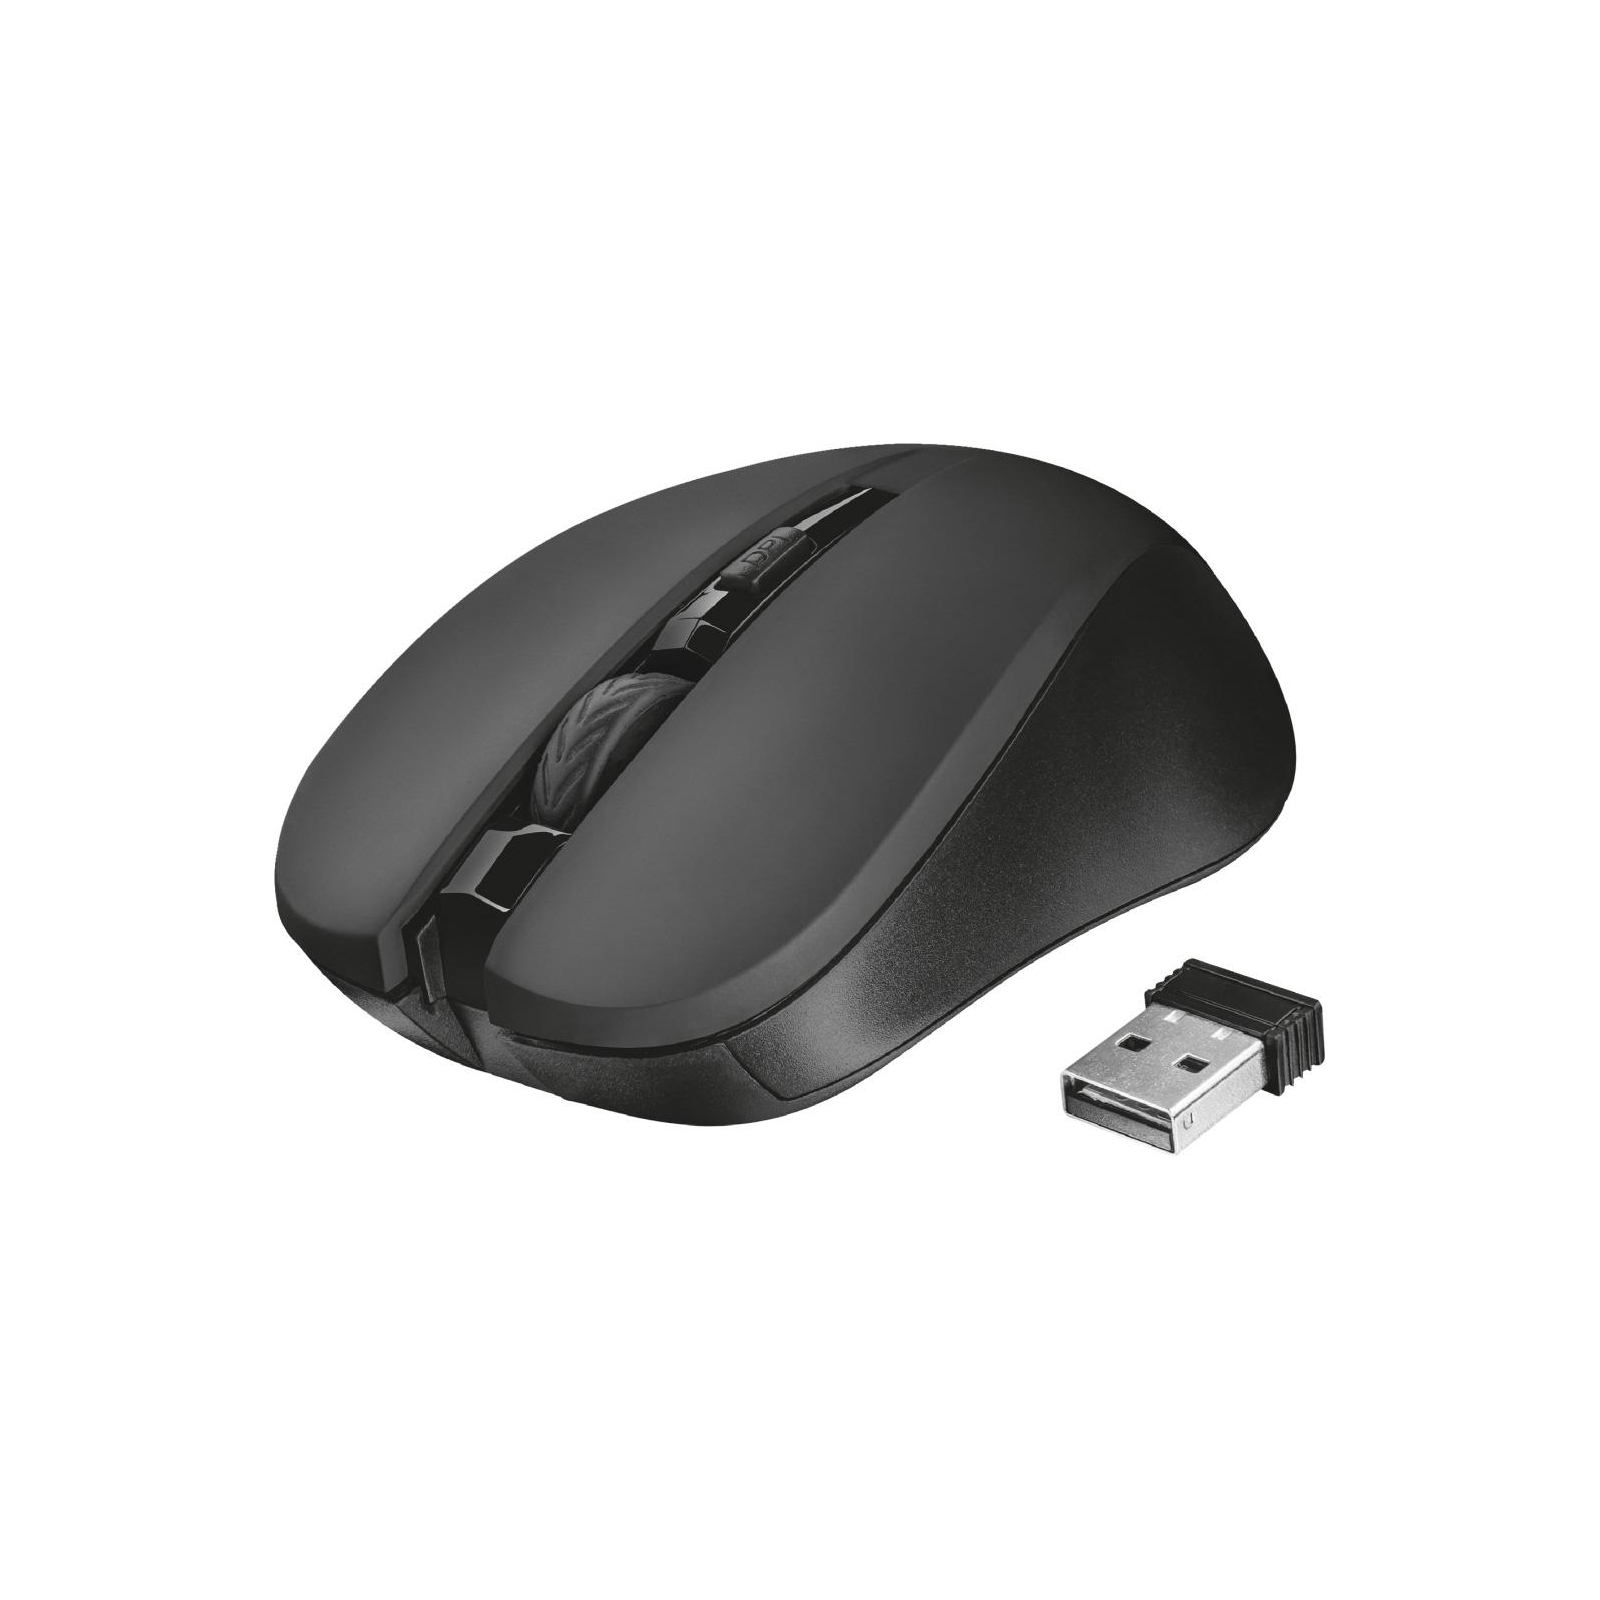 Мышка Trust Mydo Silent wireless mouse black (21869)